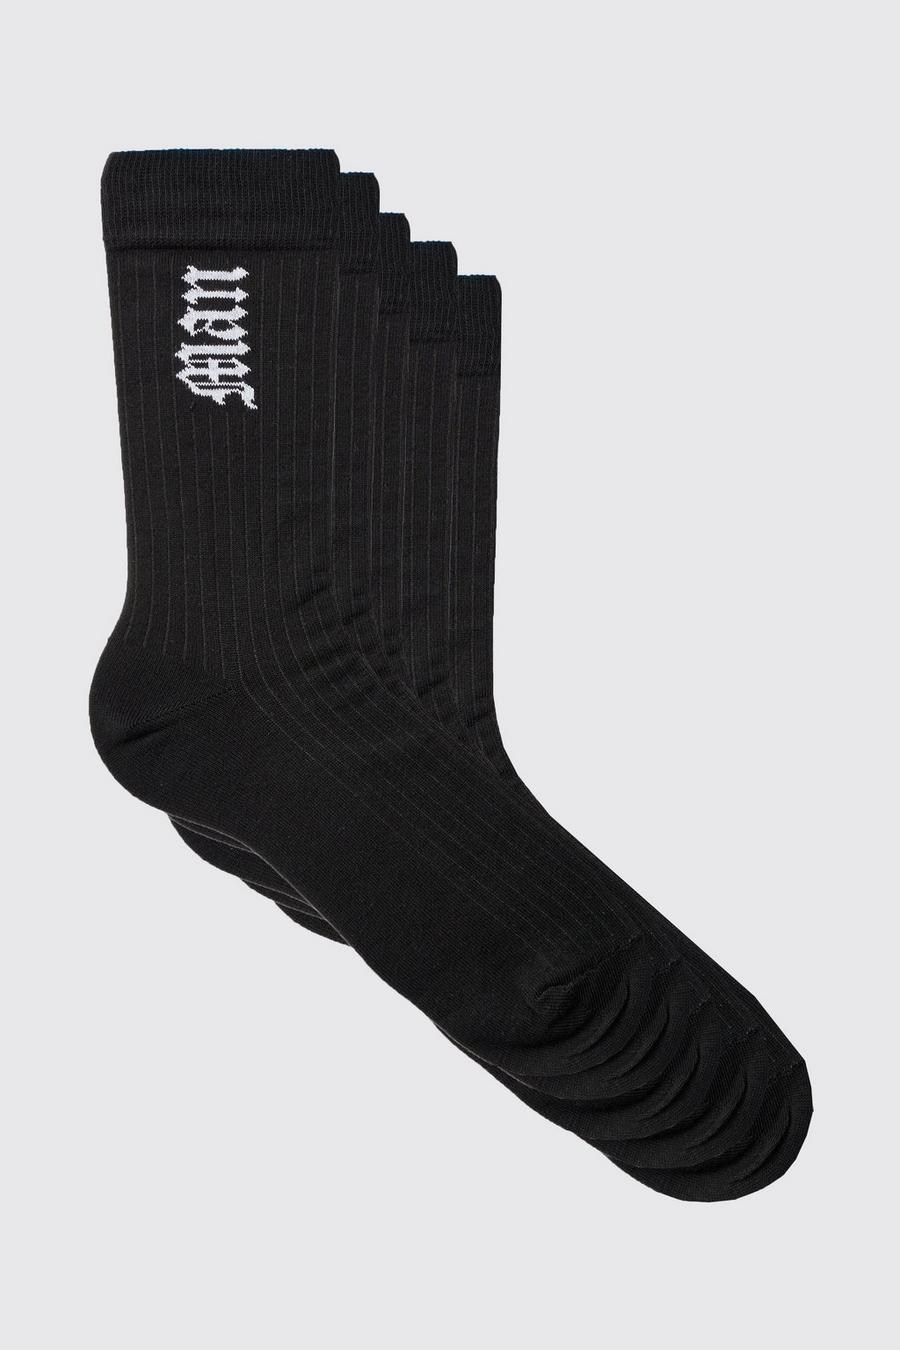 Black 5 Pack Gothic Man Sports Socks